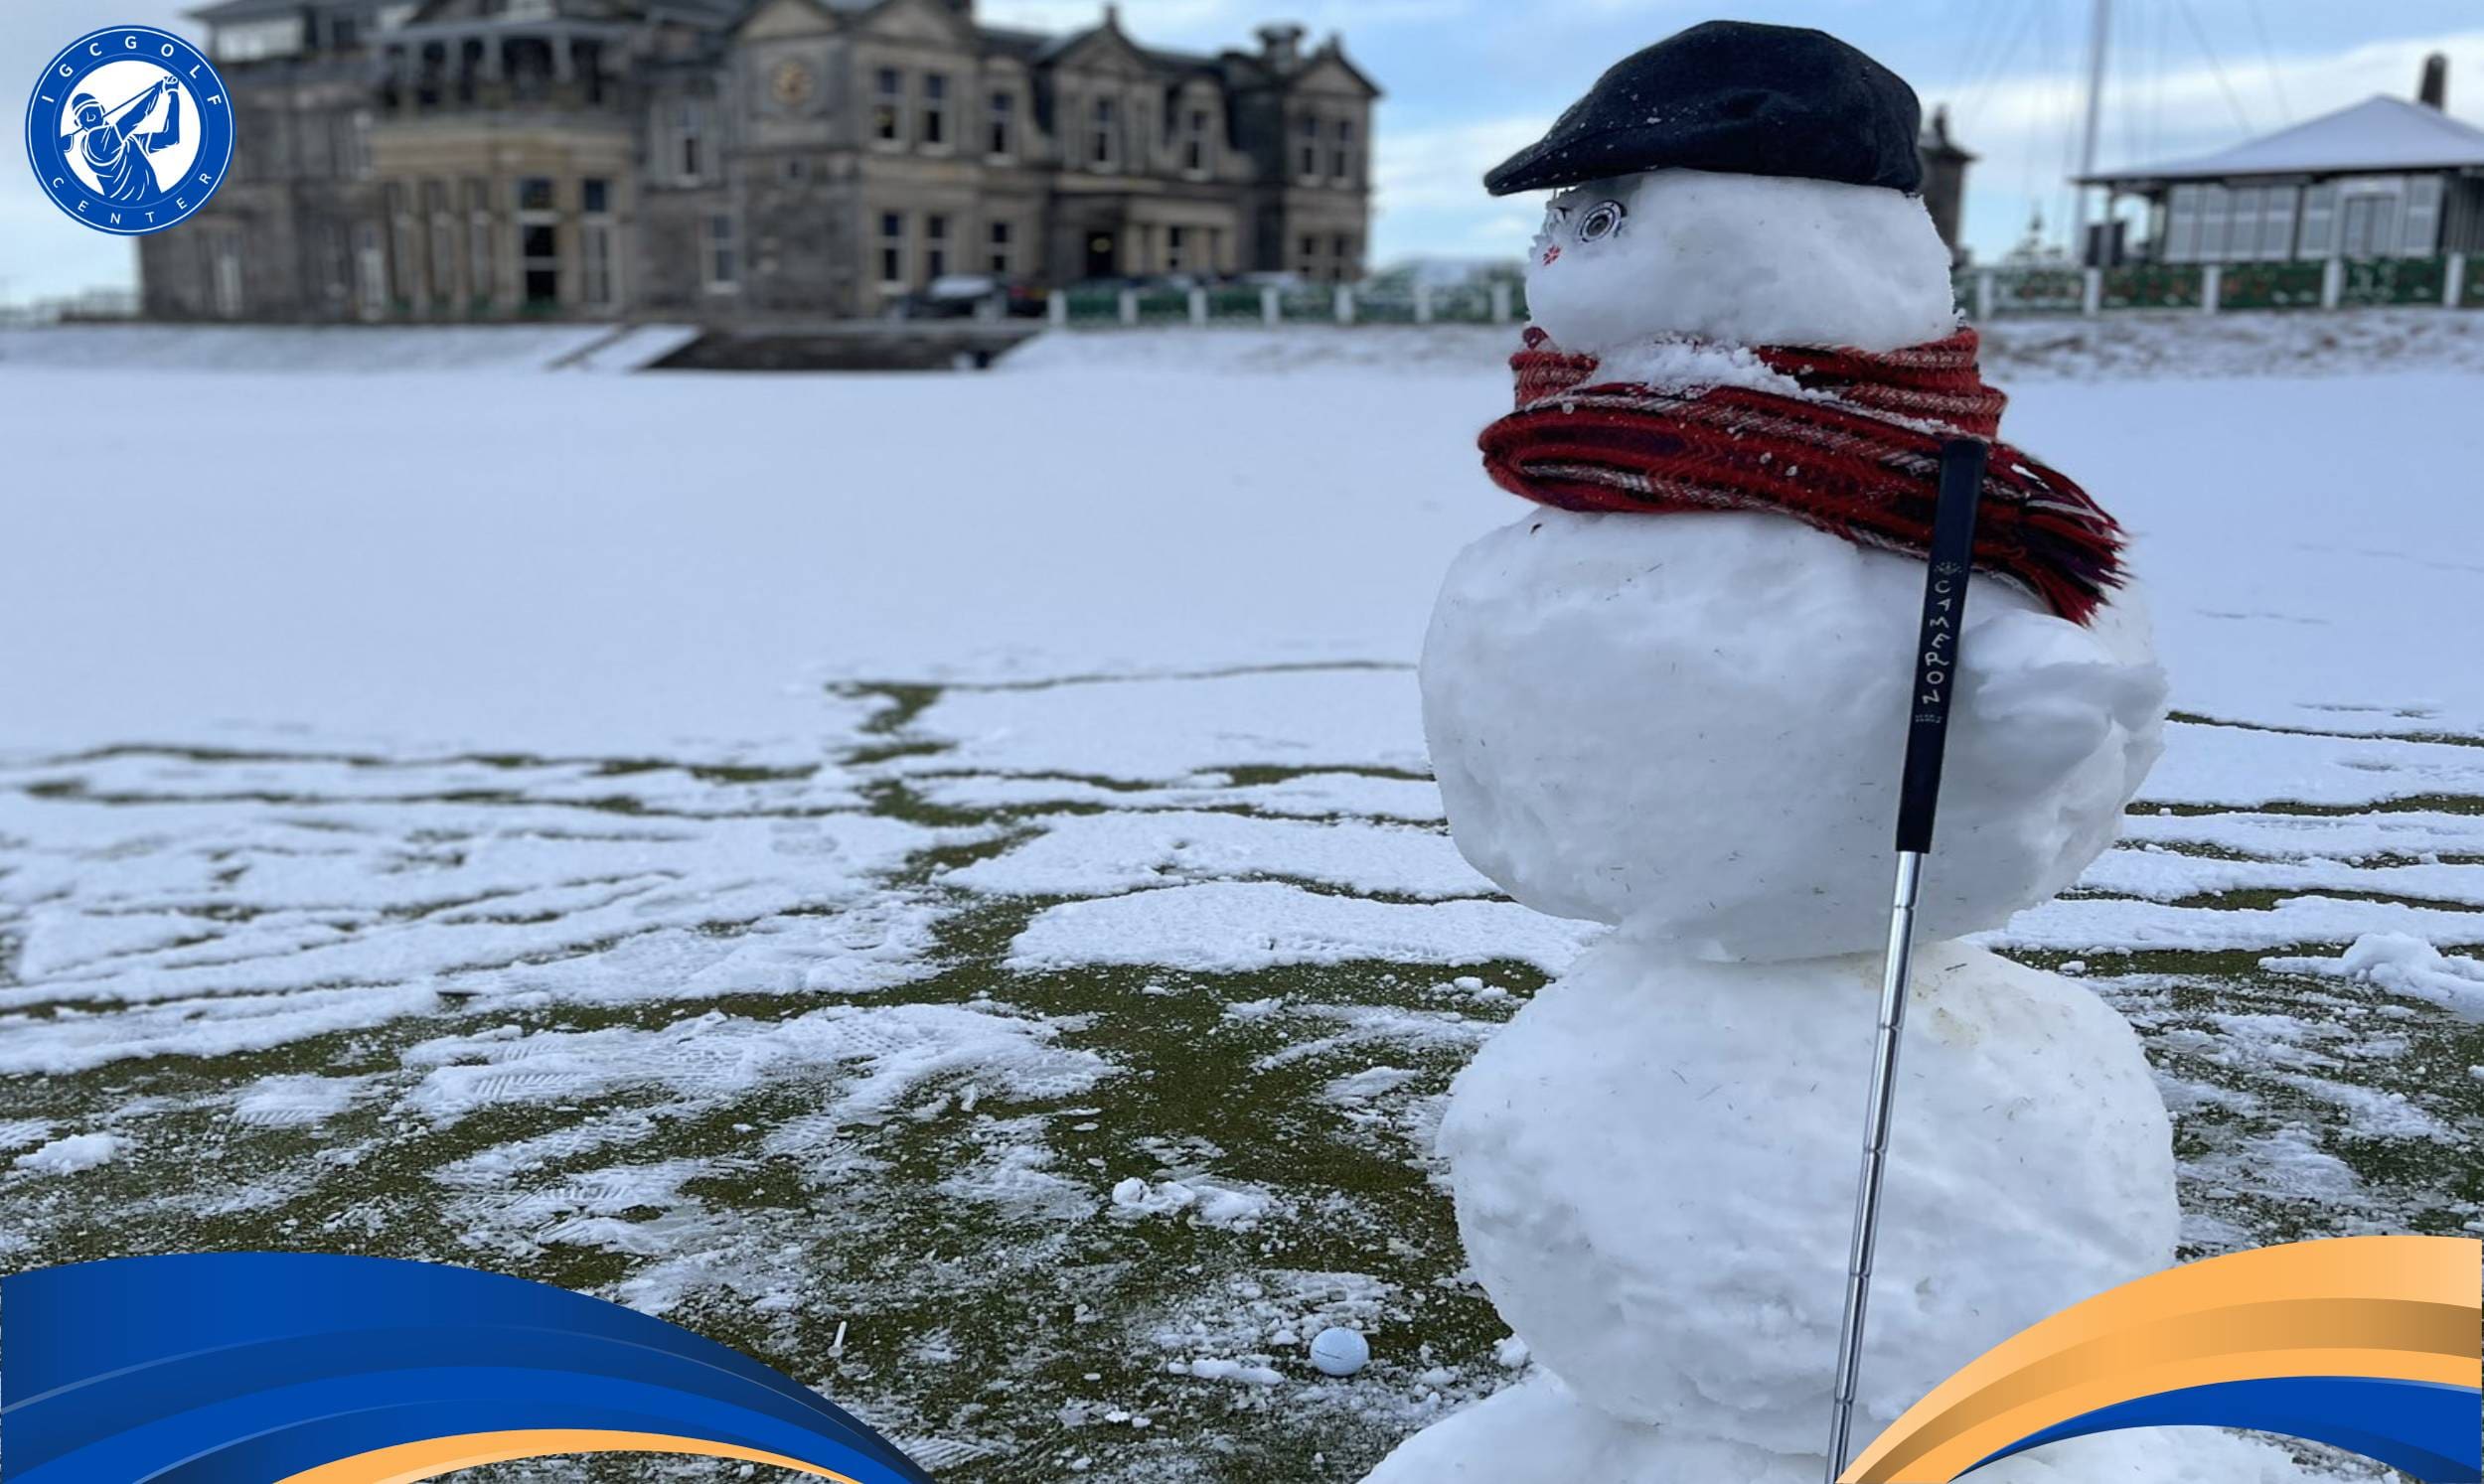 Snowman trong golf là gì